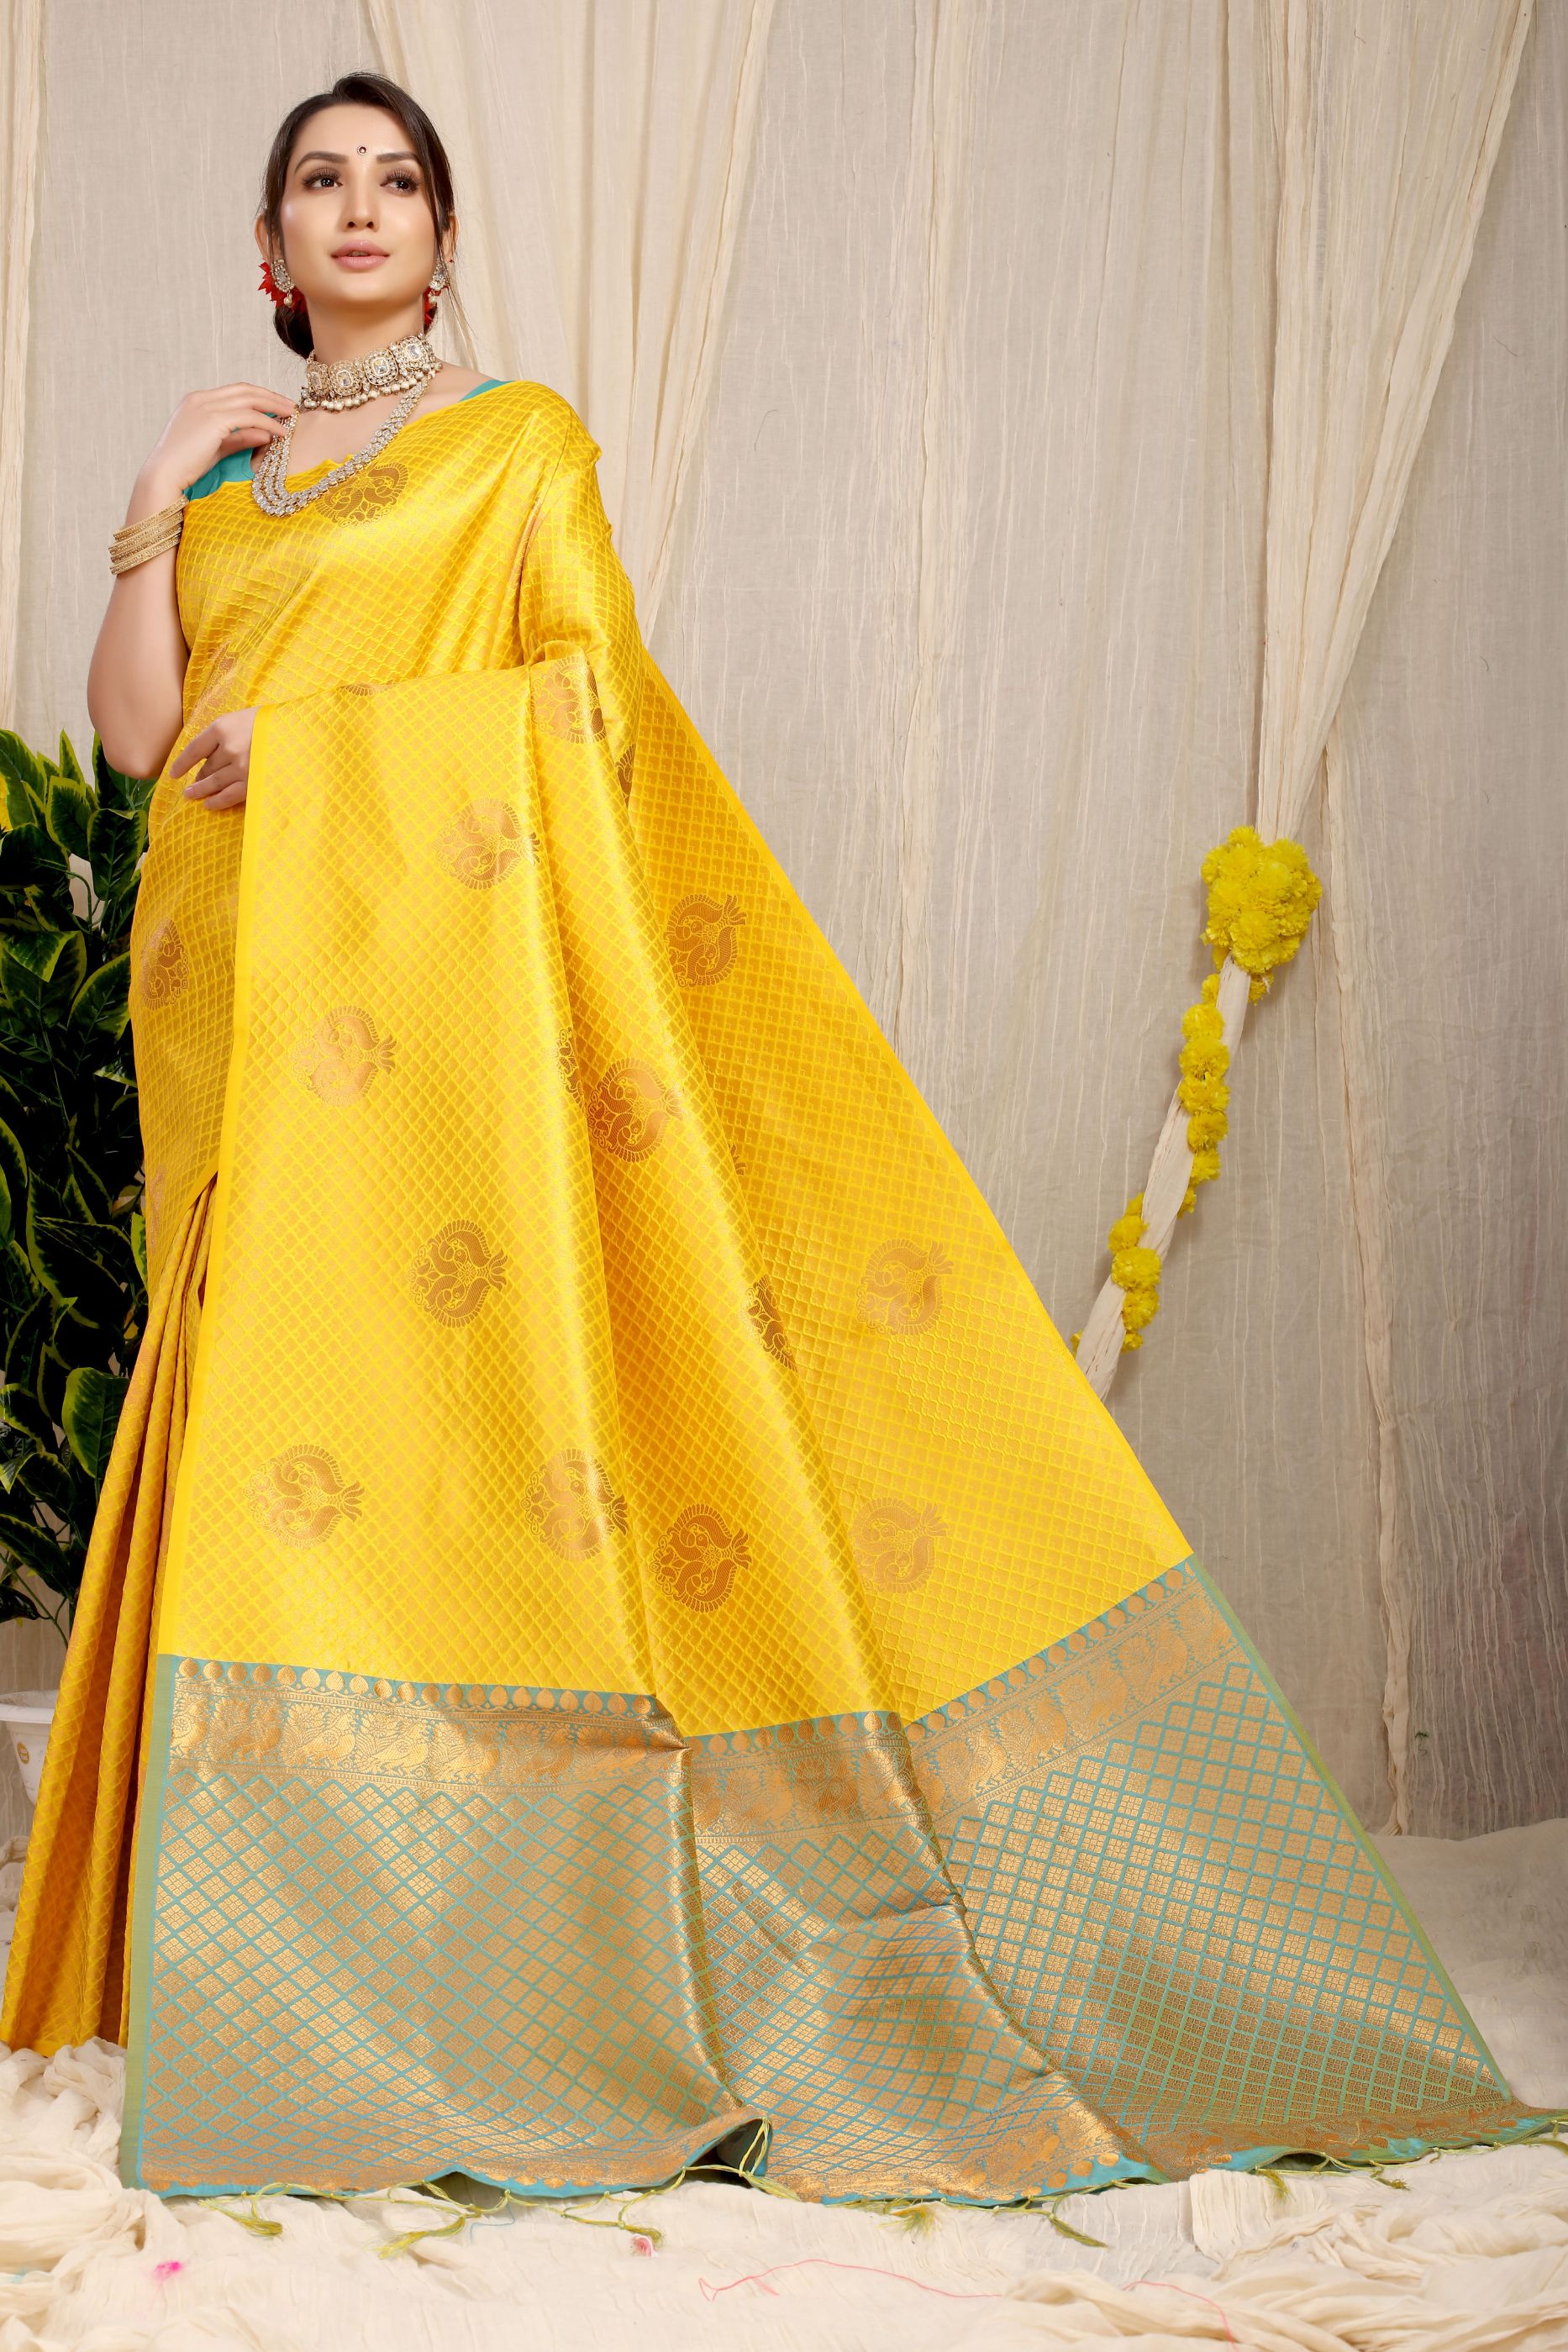 Lemon Yellow Toned Ethnic Motif New Look Woven Design Zari Kanjeevaram Saree